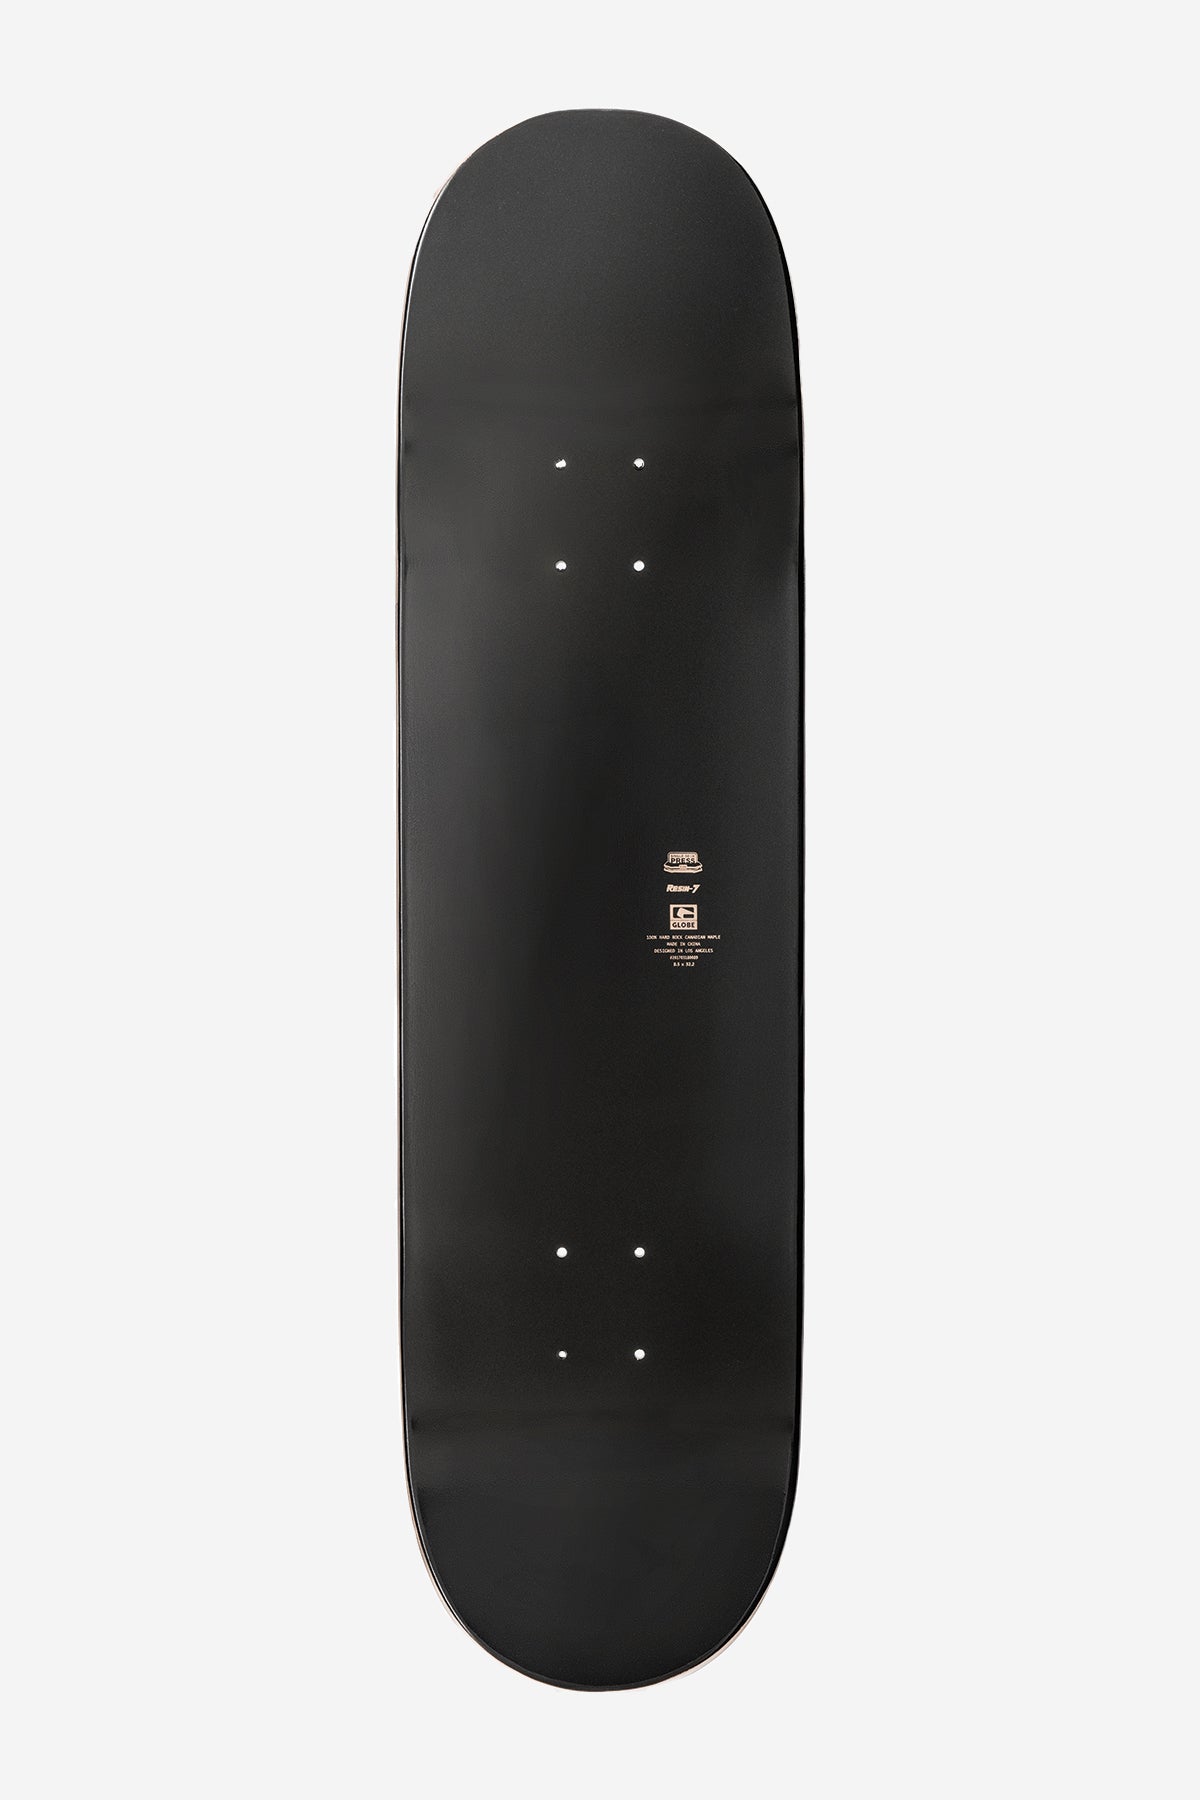 Globe - G3 Bar - Black - 8.0" & 8.5" Skateboard Deck